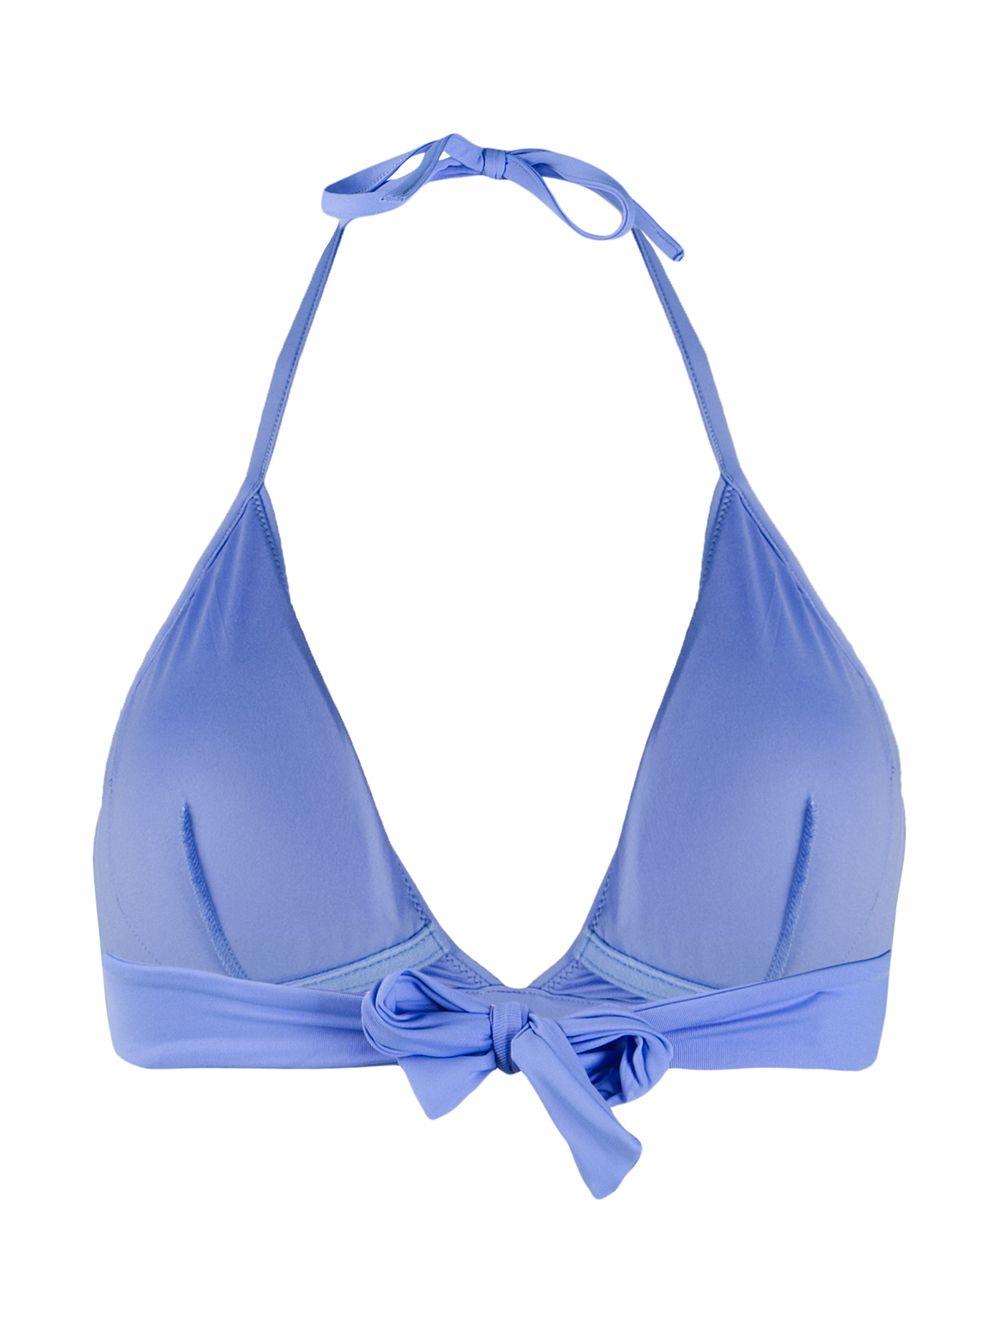 La Perla Synthetic Sequin-embellished Triangle Bikini Top in Blue - Lyst